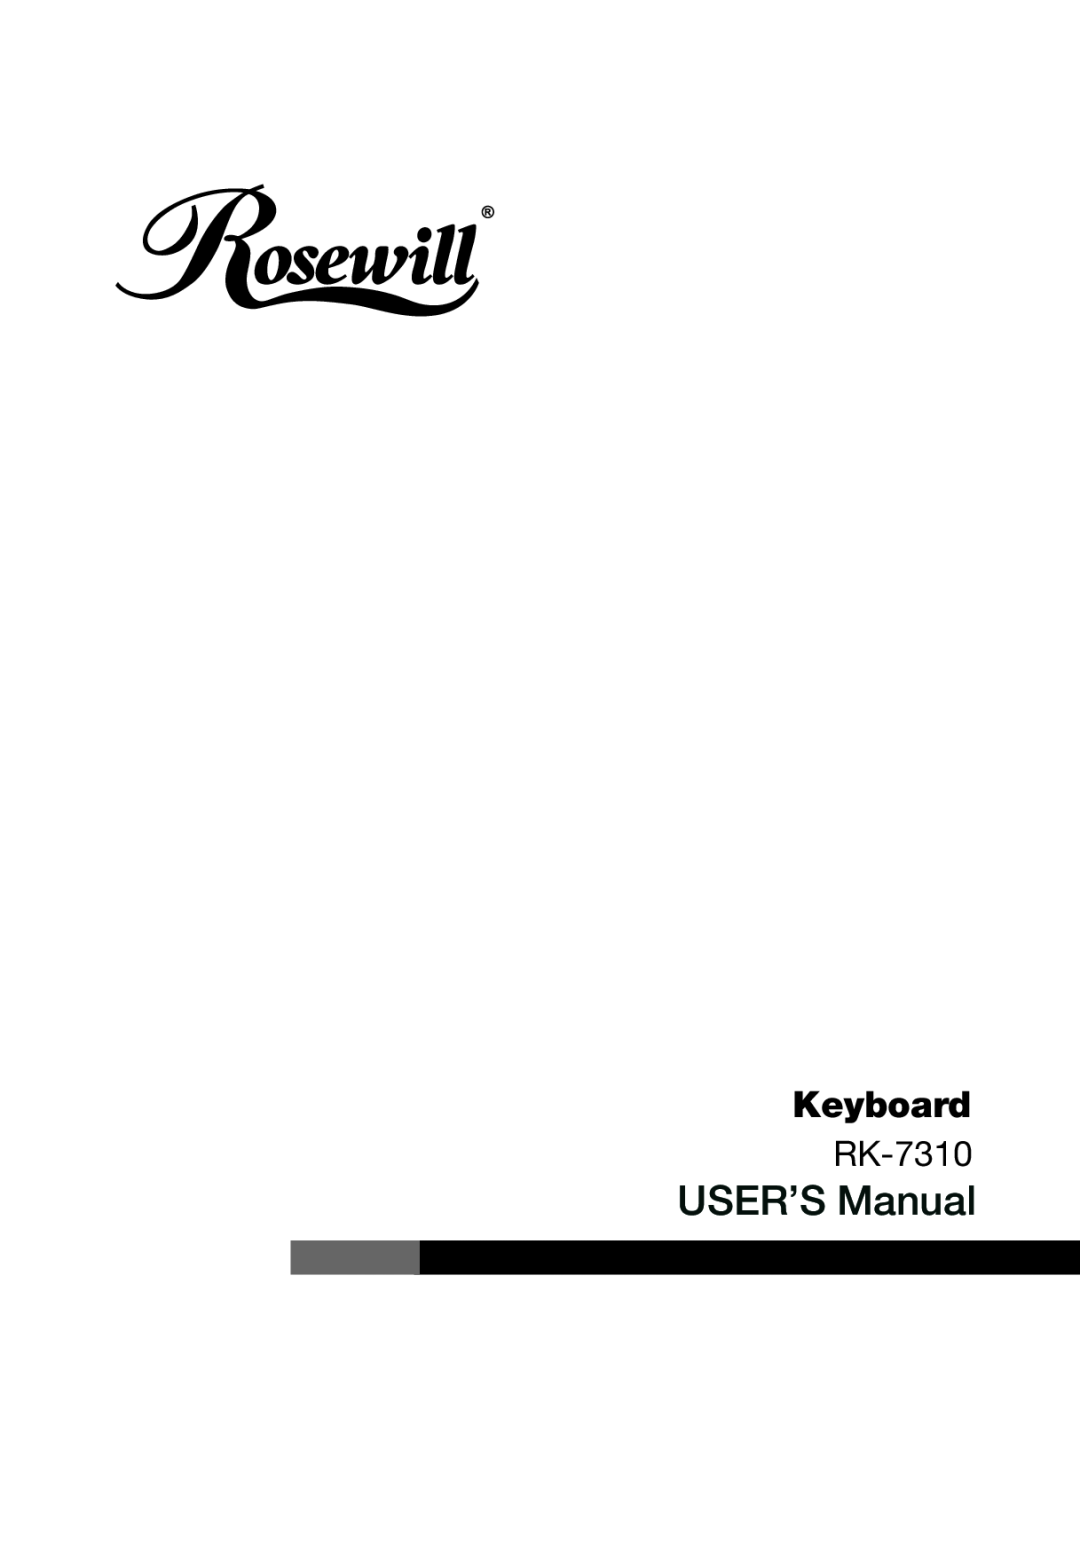 Rosewill RK-7310 user manual USER’S Manual, Keyboard 